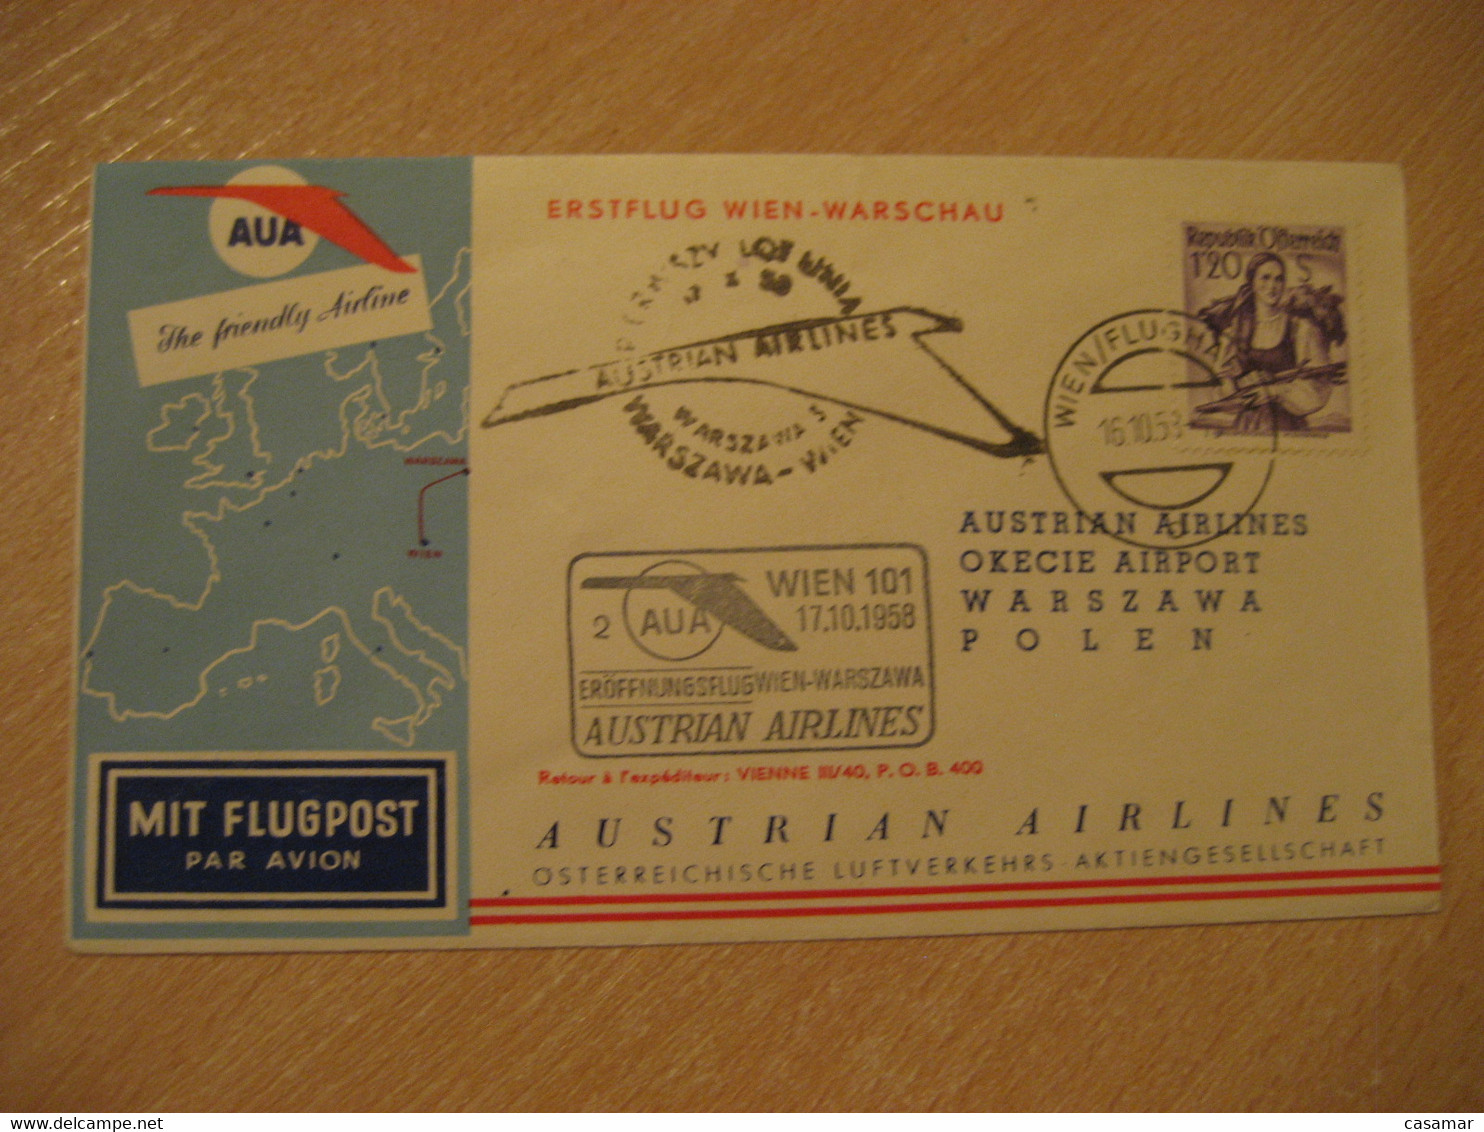 WARSZAWA Warsaw Wien 1958 AUA Austrian Airlines Airline First Flight Cancel Cover POLAND AUSTRIA - Posta Aerea